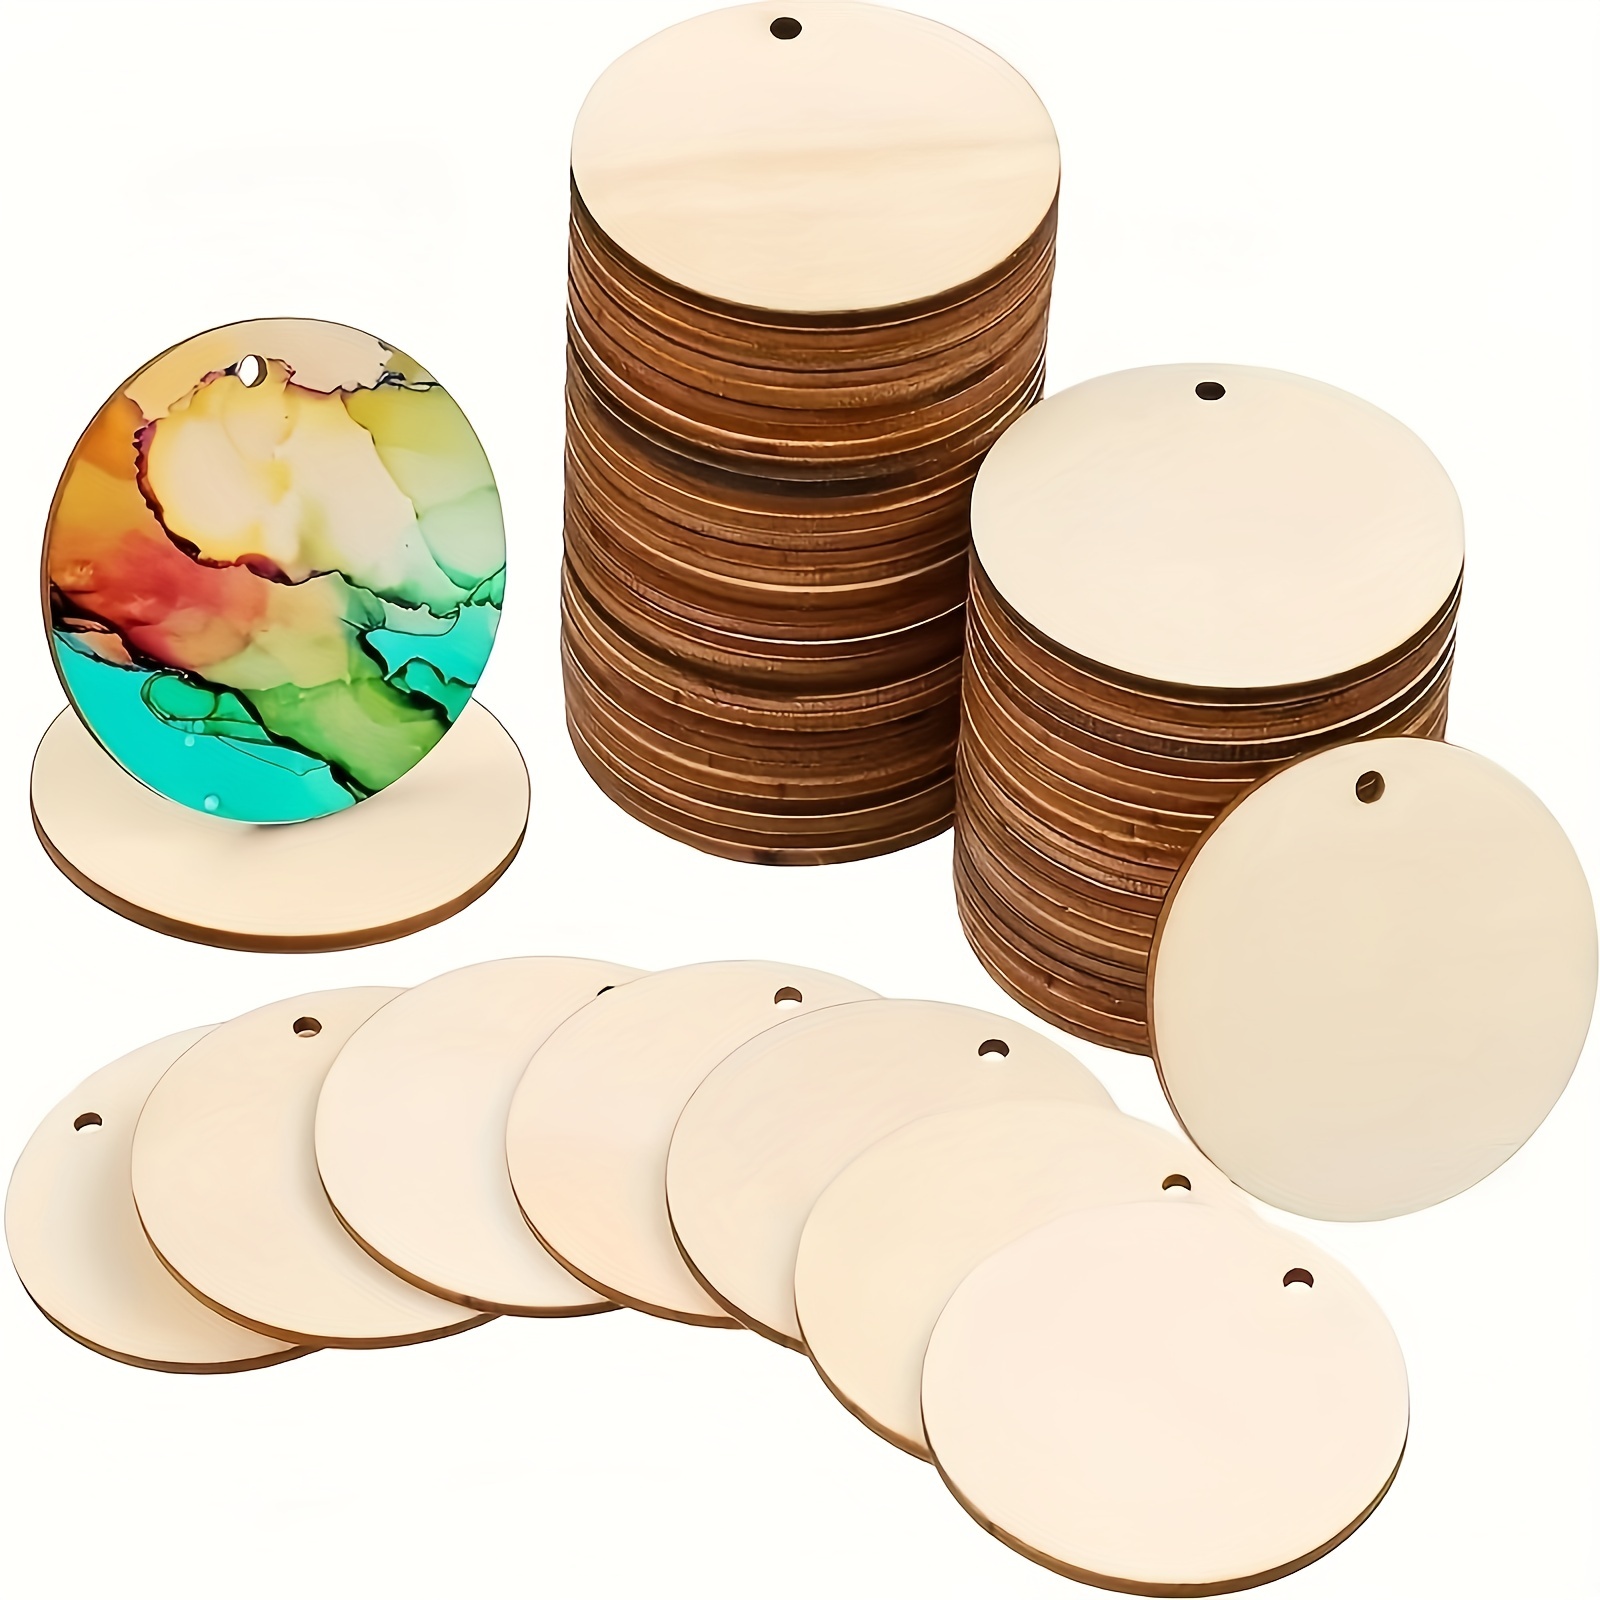 Round Wood Discs for Crafts,5 Pack 14 Inch Wood Circles Unfinished Wood  Wood Plaque for Crafts,Door Hanger,Door Design